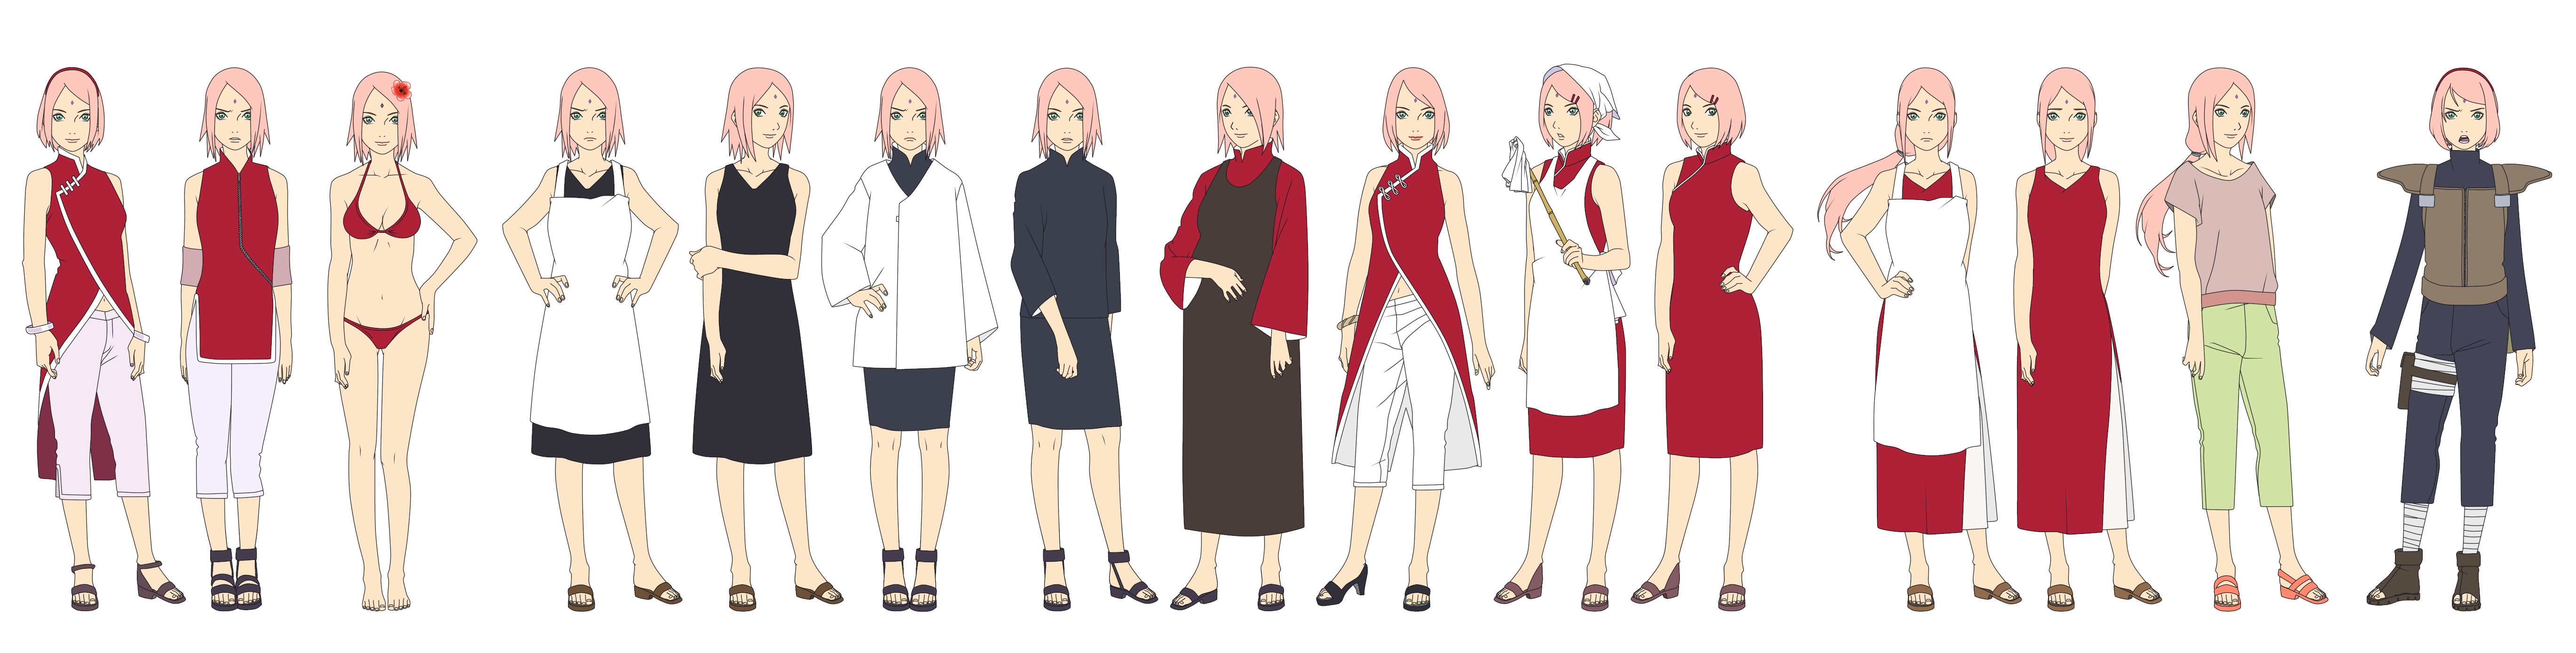 Sakura Haruno New Era 2 Outfit Color by SunakiSabakuno on DeviantArt